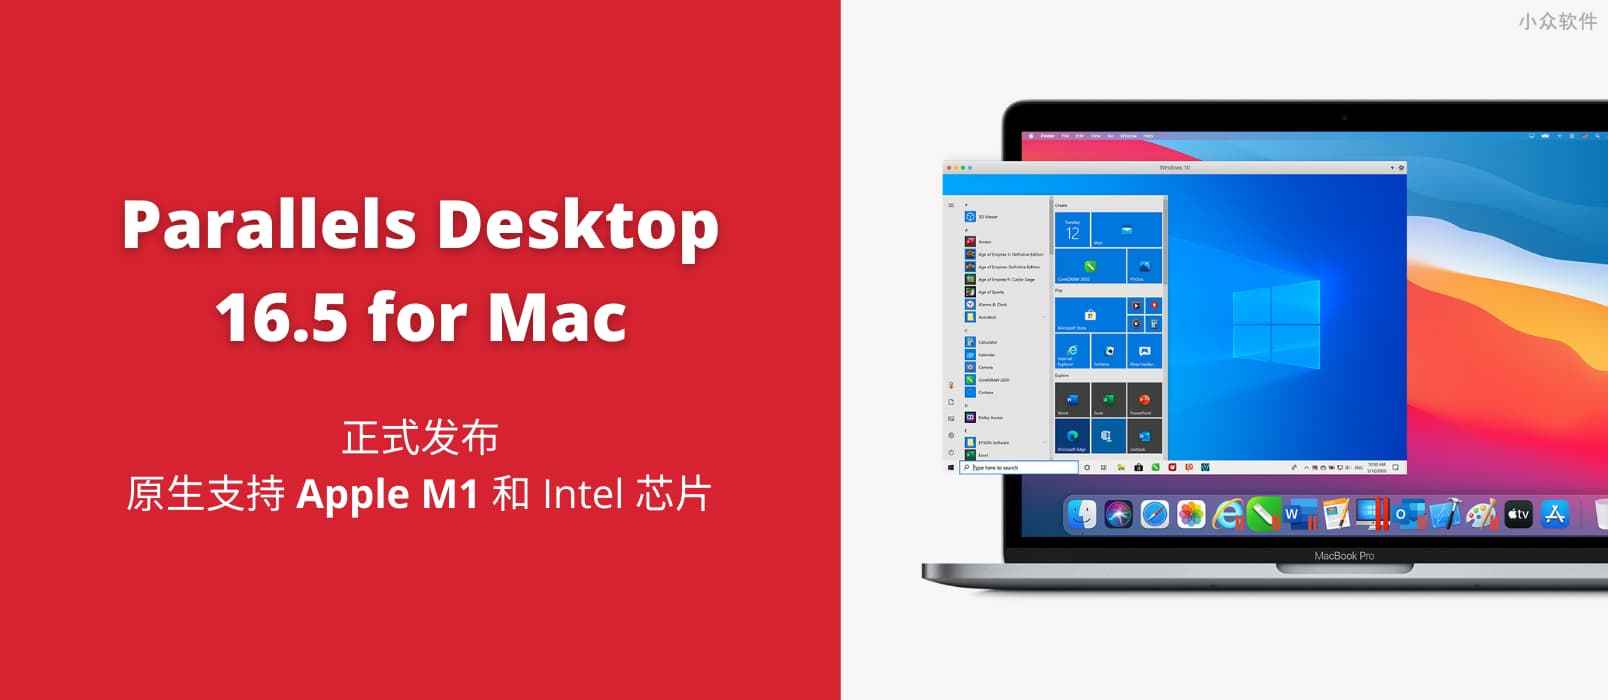 Parallels Desktop 16.5 for Mac 正式发布，原生支持 M1 和 Intel 芯片，在 Mac 上以原生速度运行 Windows 10，限时 9 折优惠